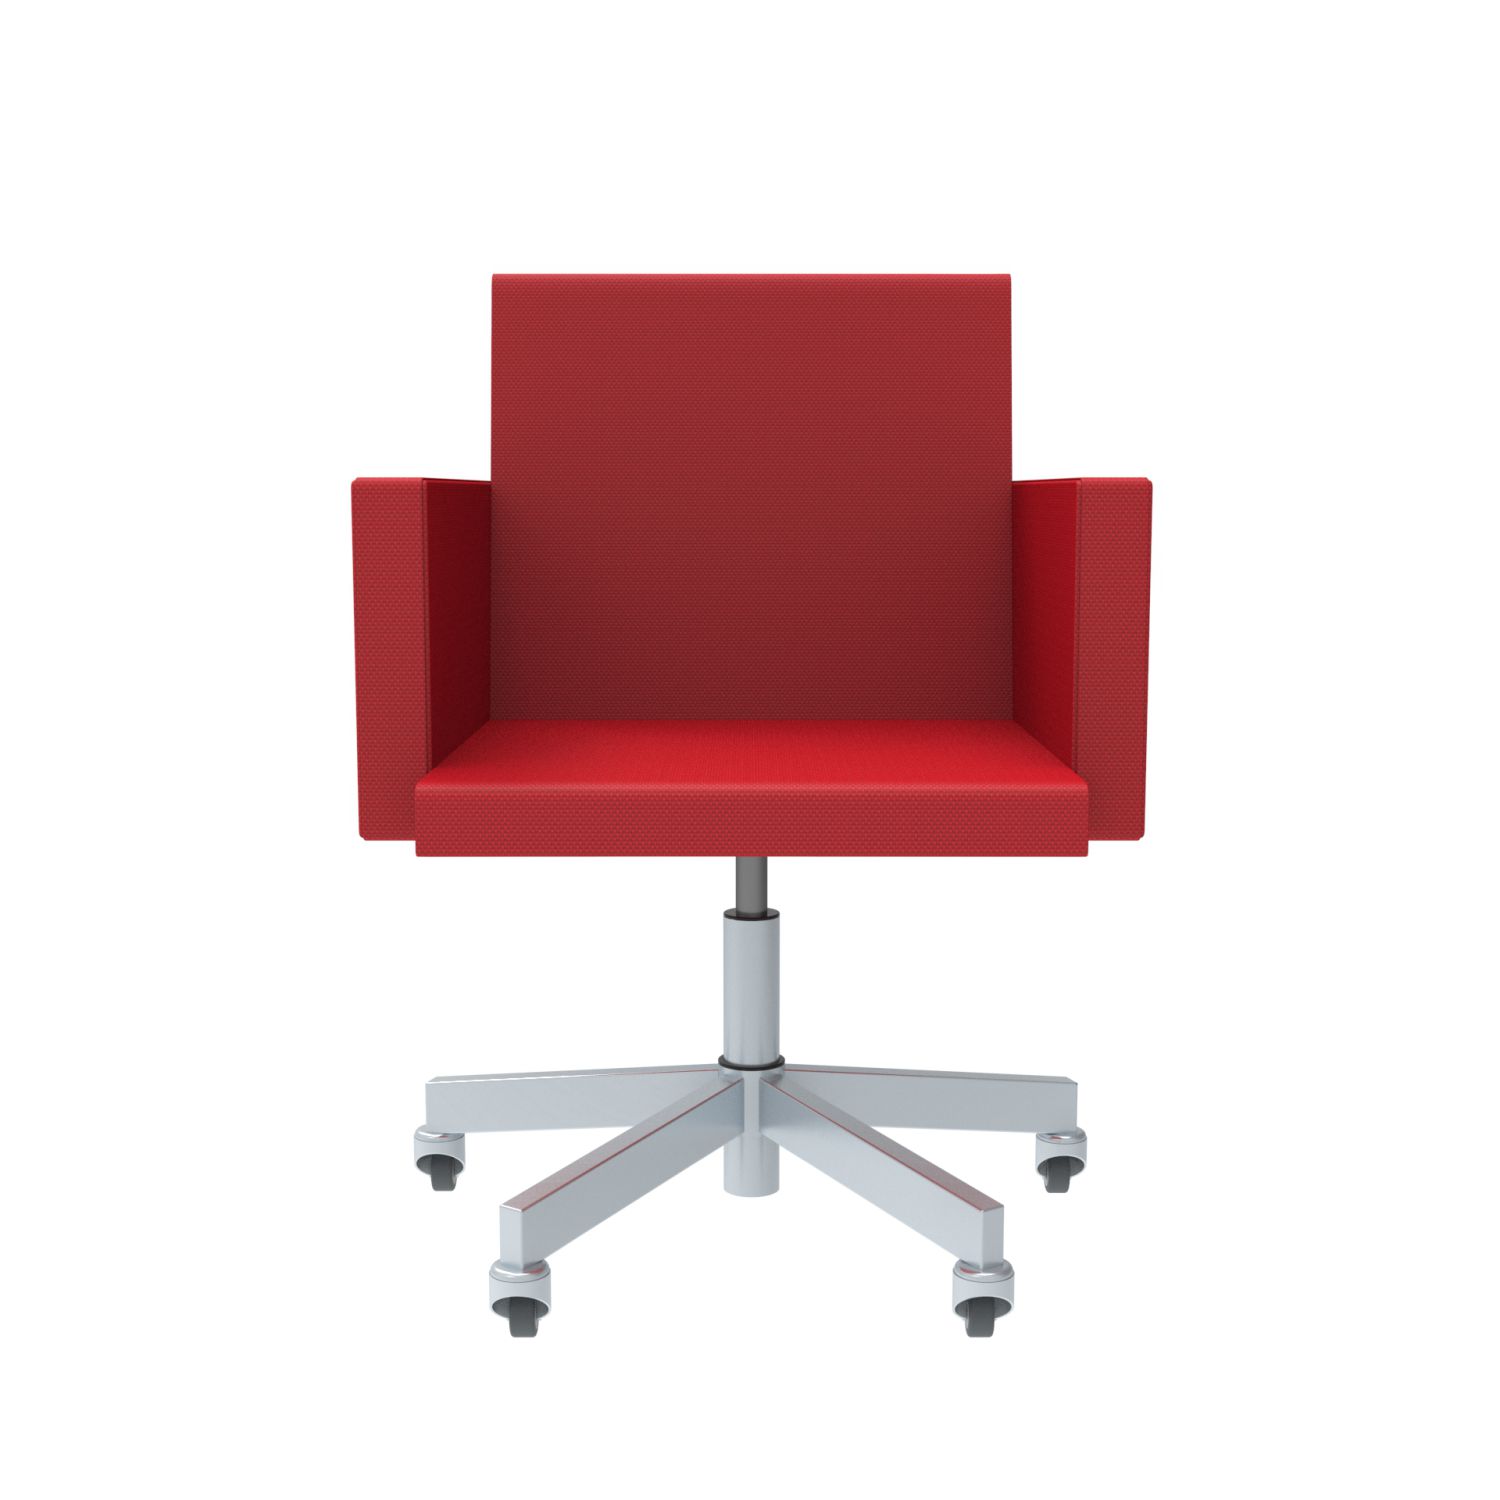 lensvelt atelier van lieshout office chair with armrests grenada red 010 galvanized soft rolls